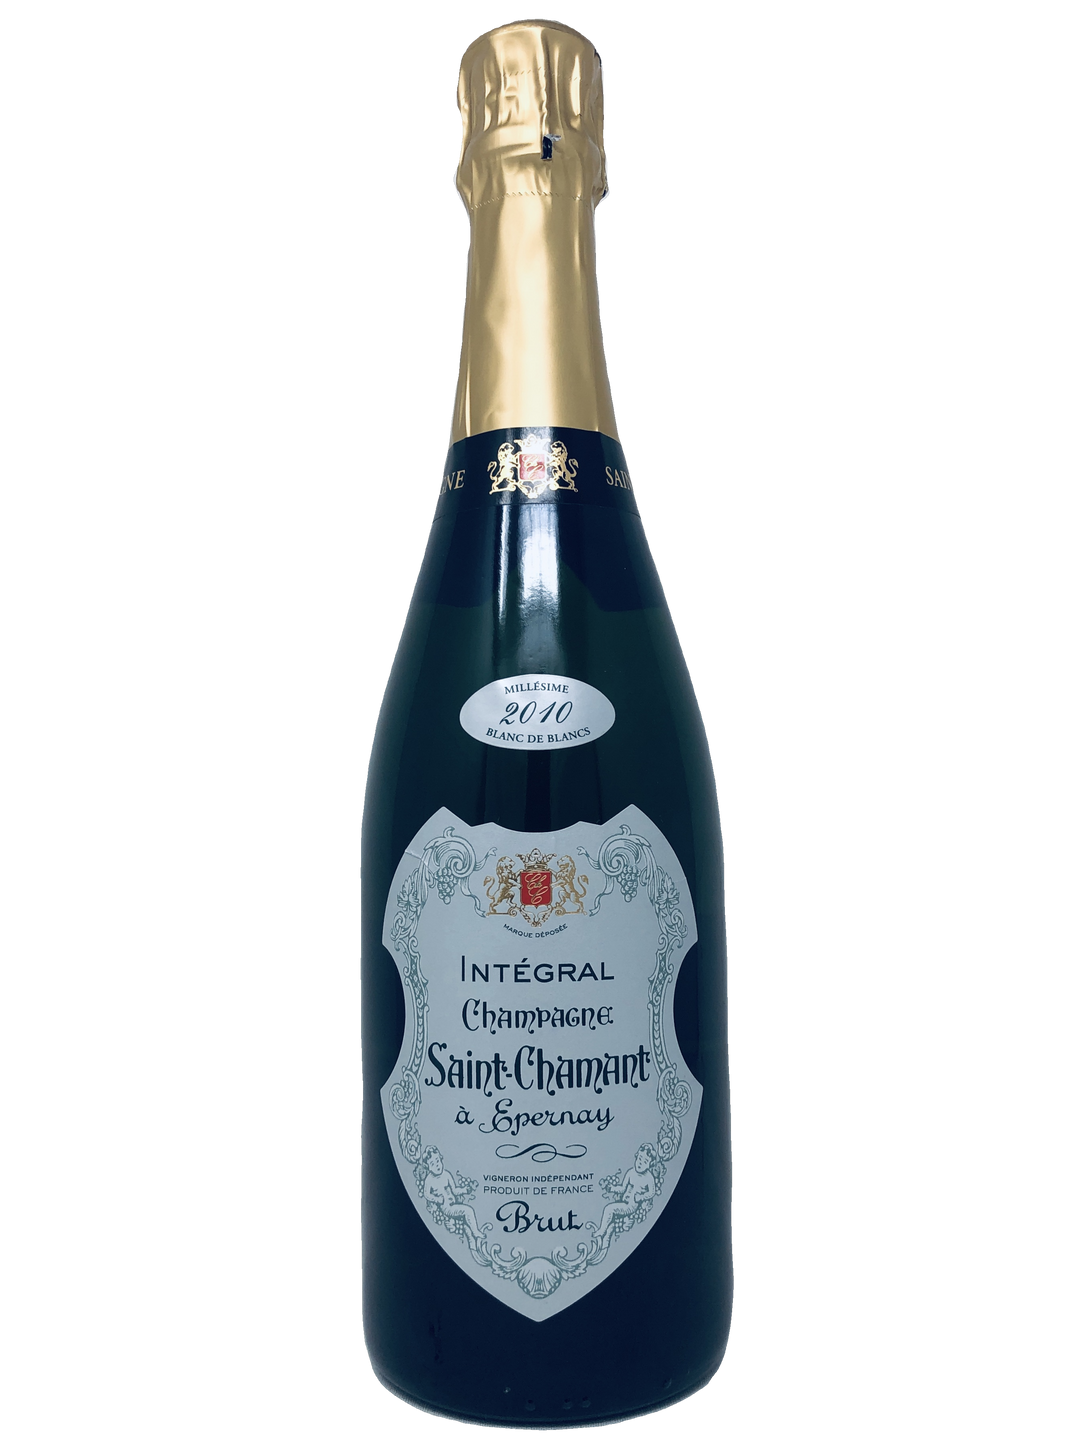 Champagne Saint-Chamant "Integral" Brut 2010